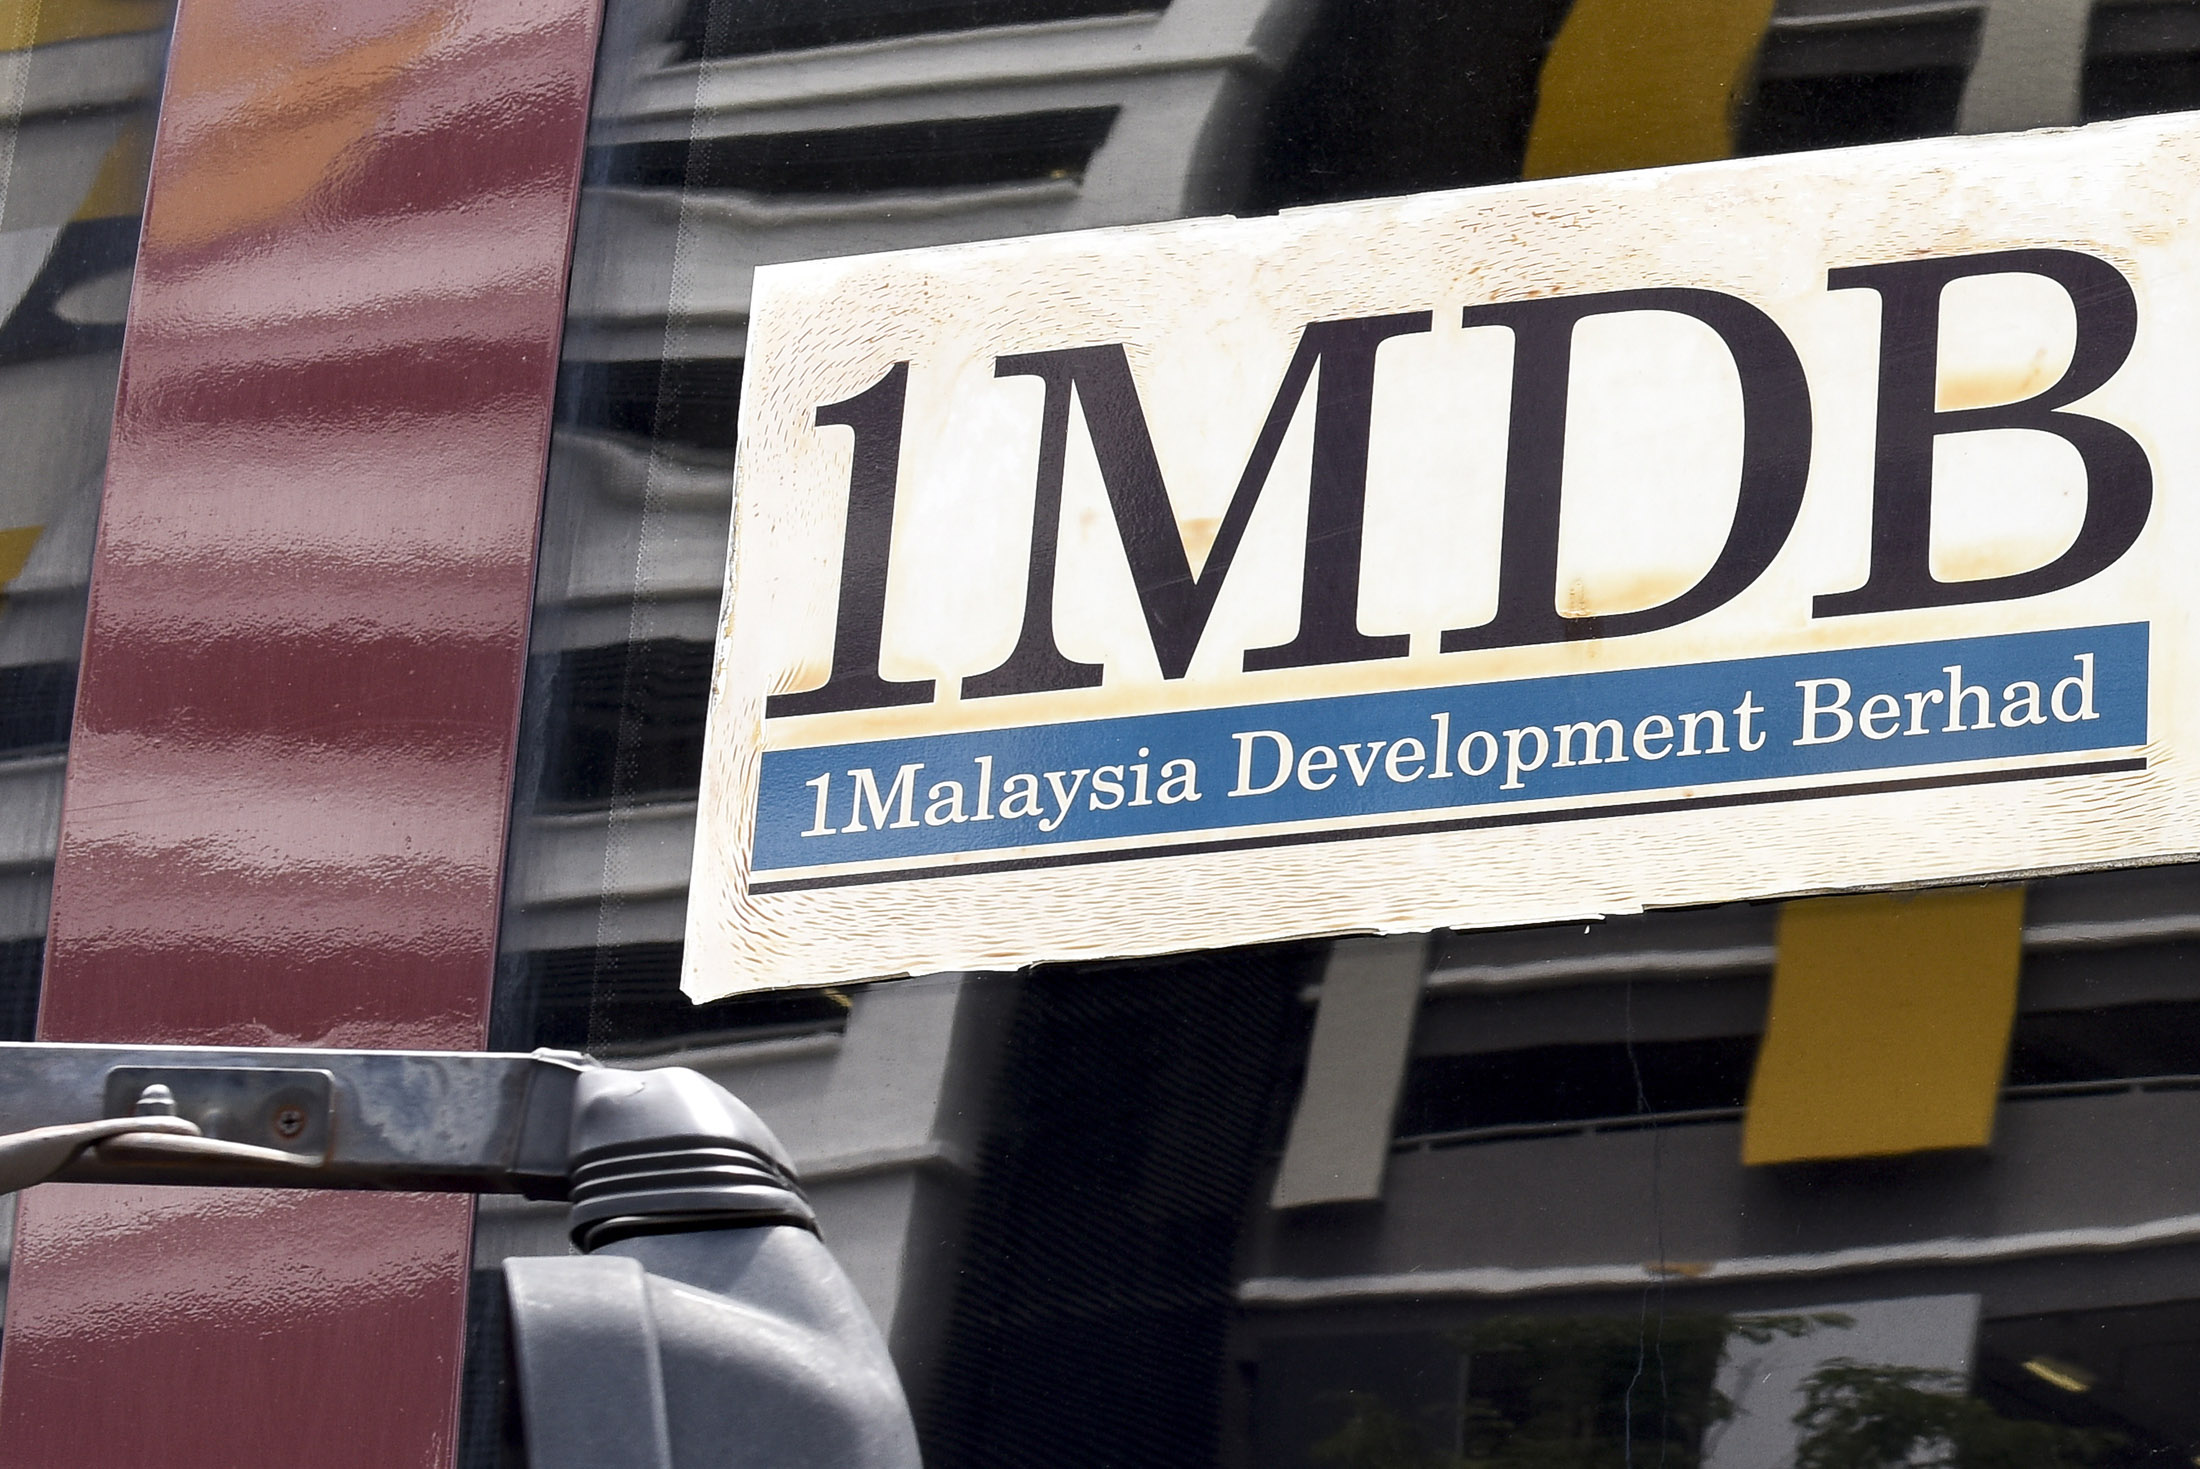 The 1MDB logo